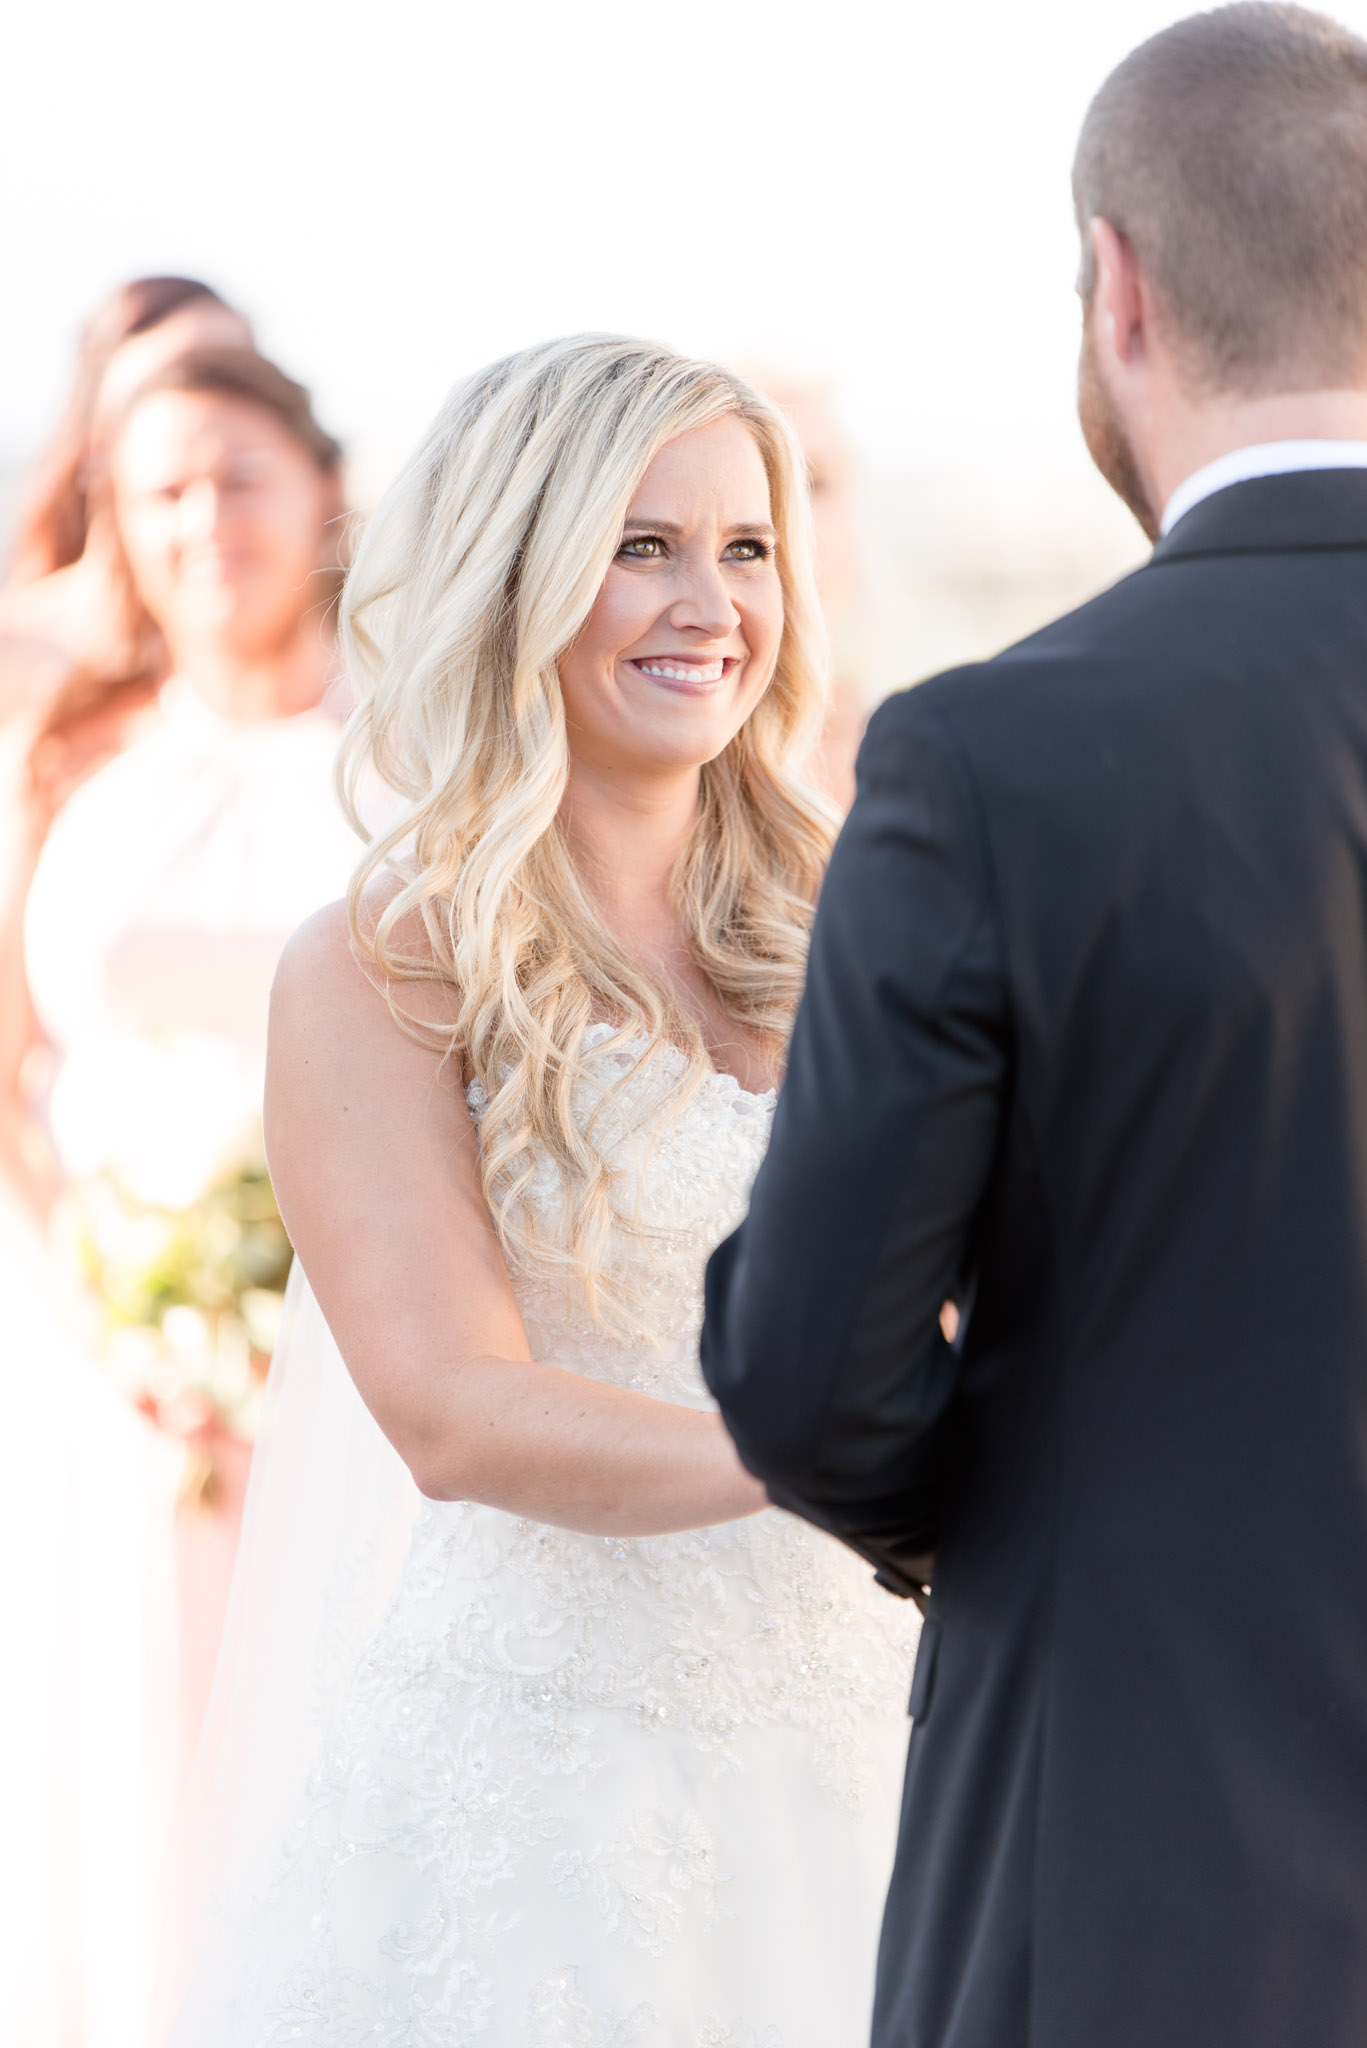 Bride smiles during wedding ceremony.